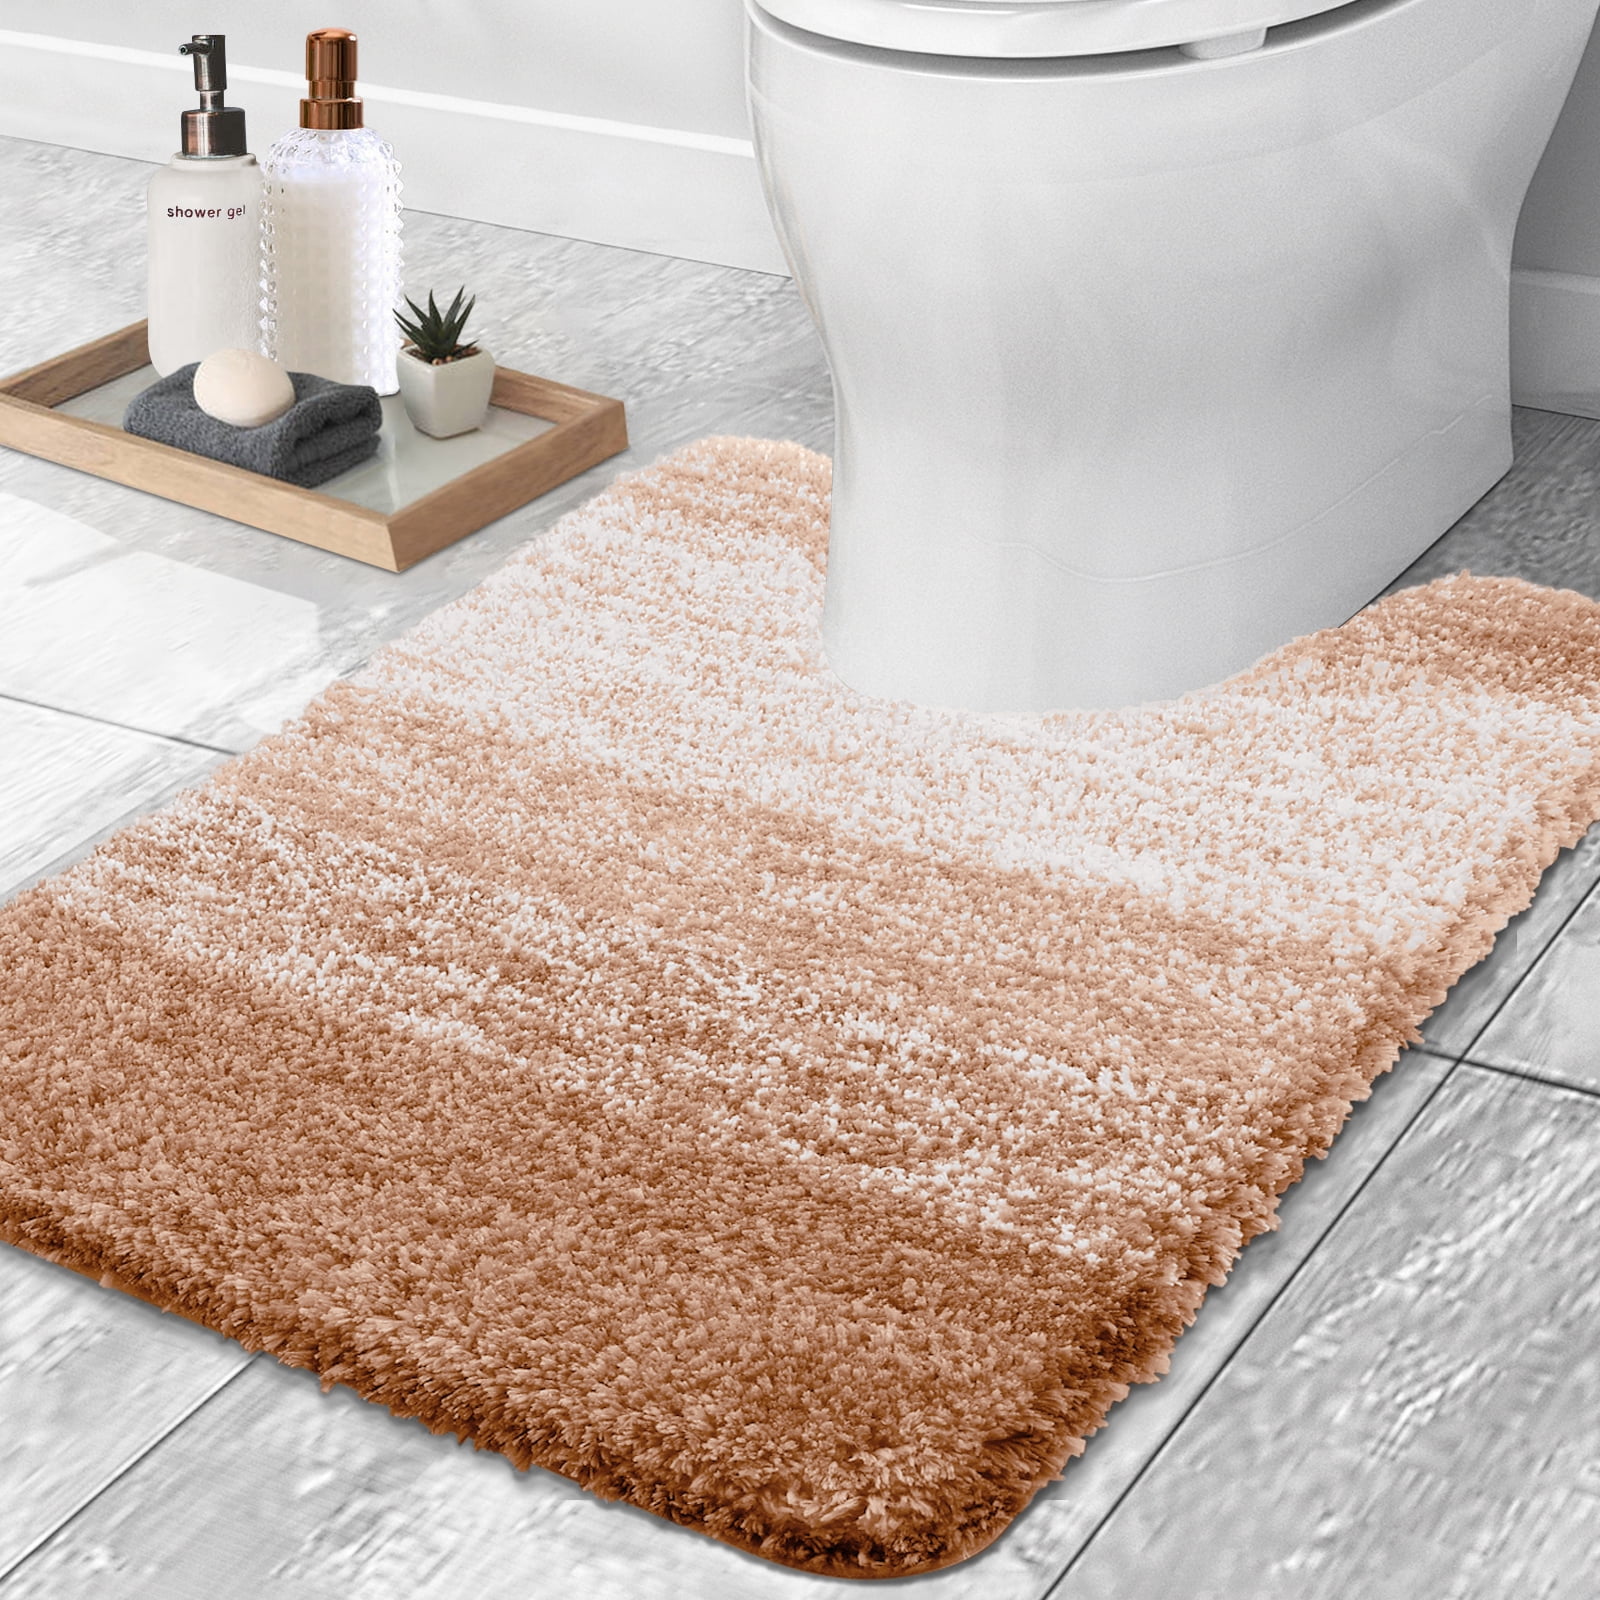 U Shaped Bathroom Rugs Contour Non-slip Toilet Mat Absorbent Cozy Velvet  Floor Mat 23.62 x, 1 unit - Gerbes Super Markets